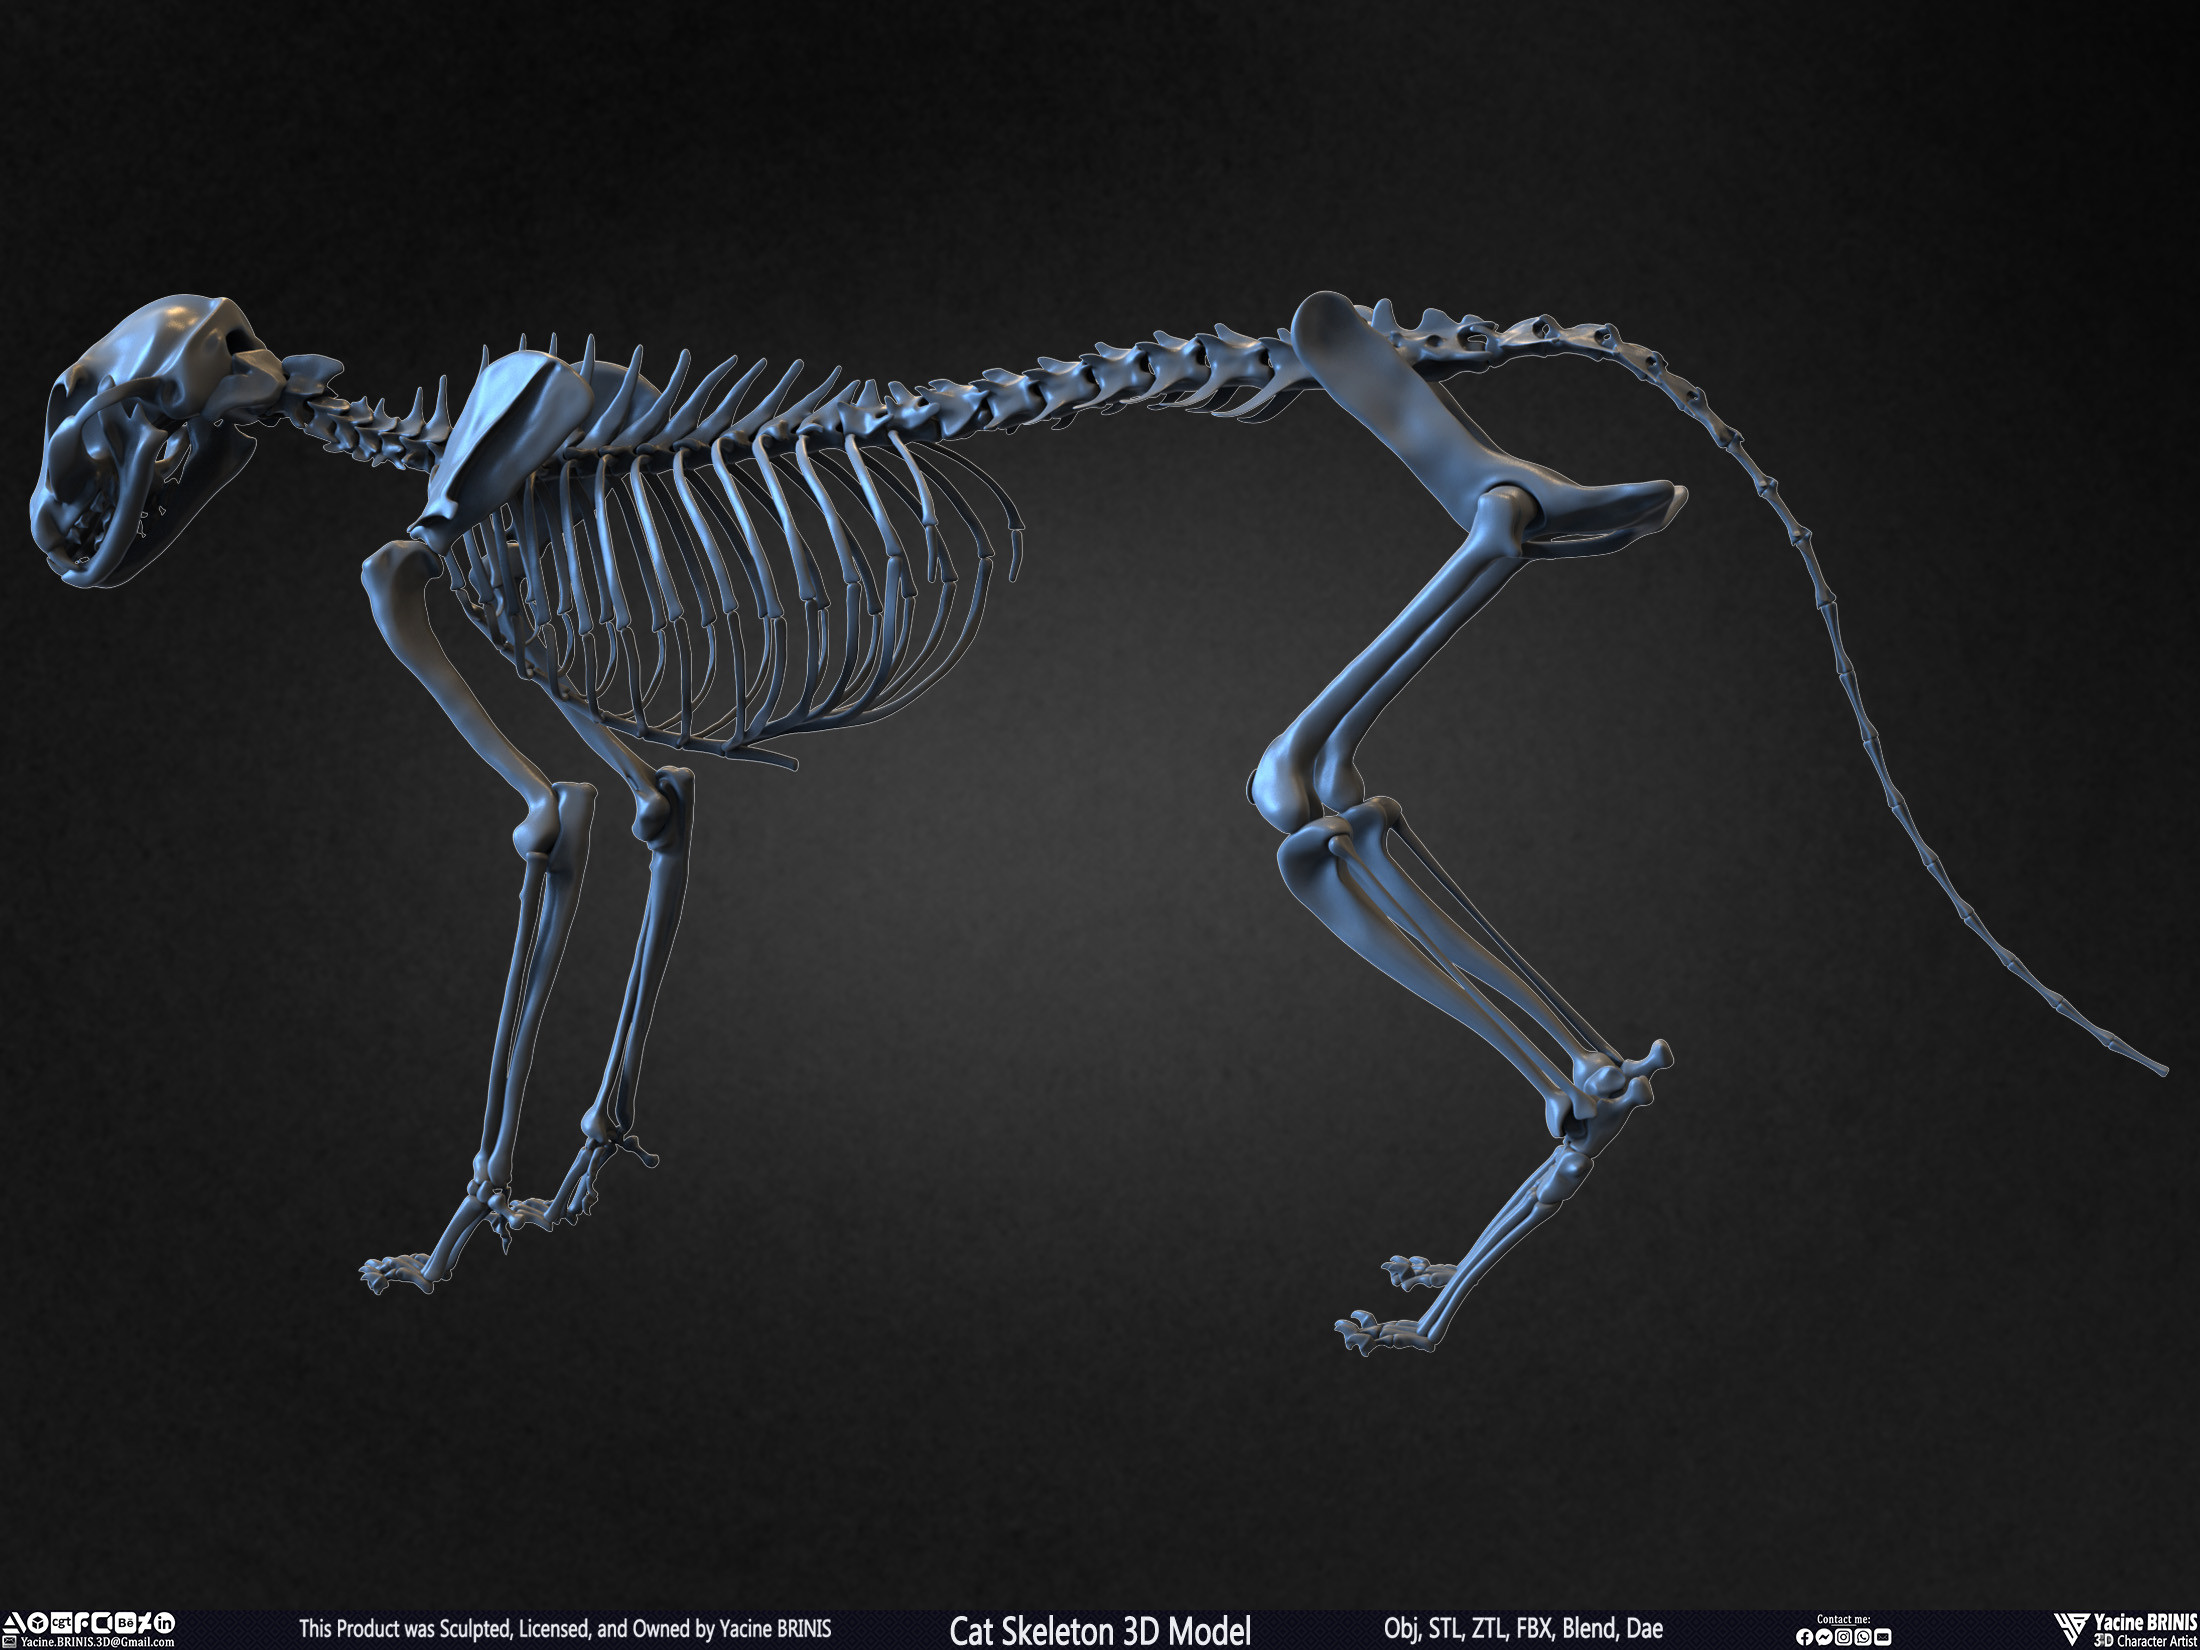 Highly Detailed Cat Skeleton 3D Model Sculpted by Yacine BRINIS Set 013